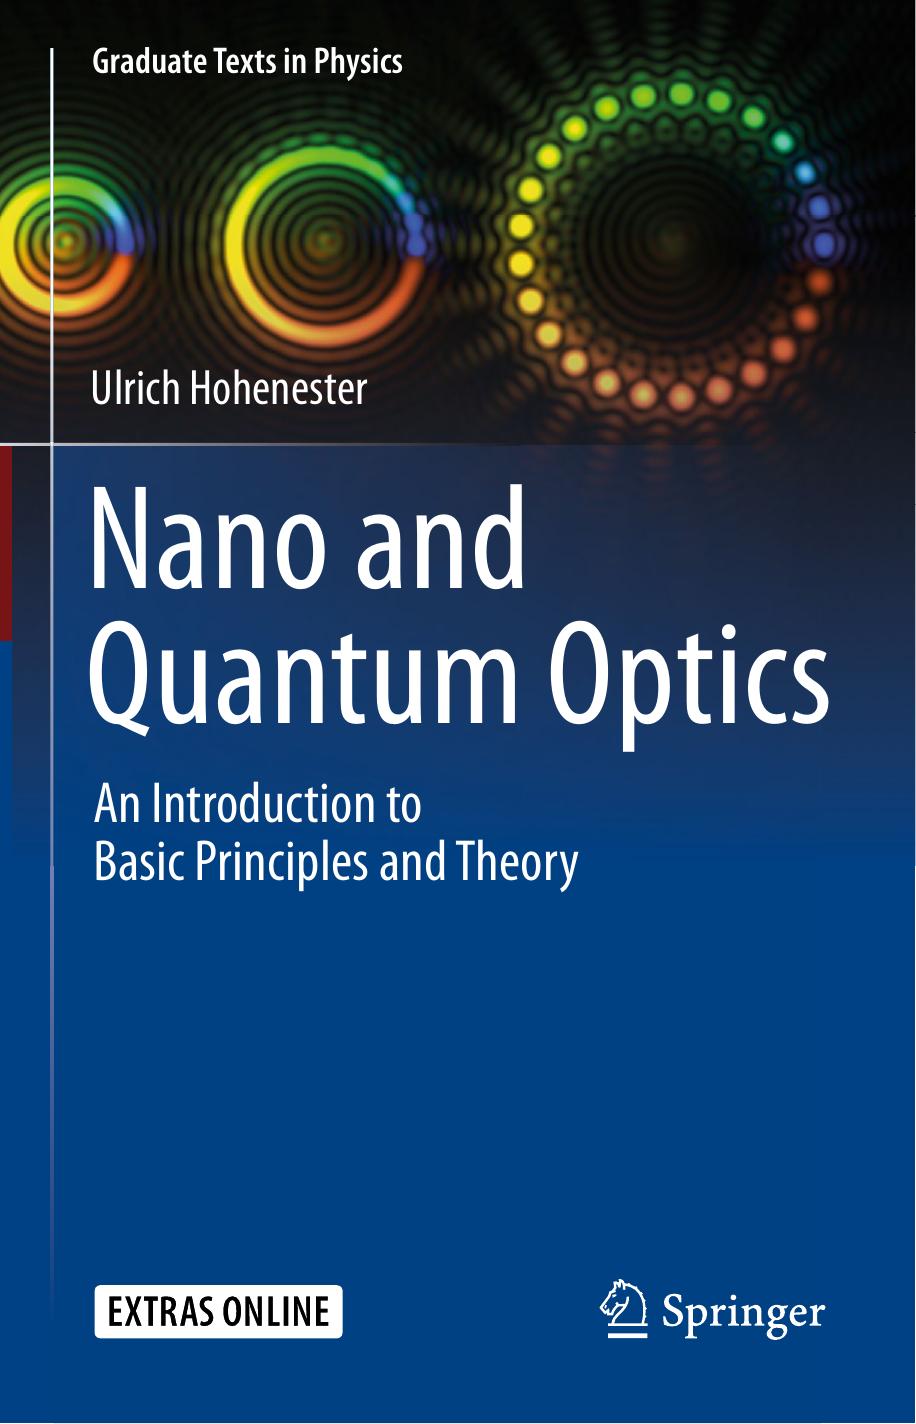 Nano and Quantum Optics by Ulrich Hohenester